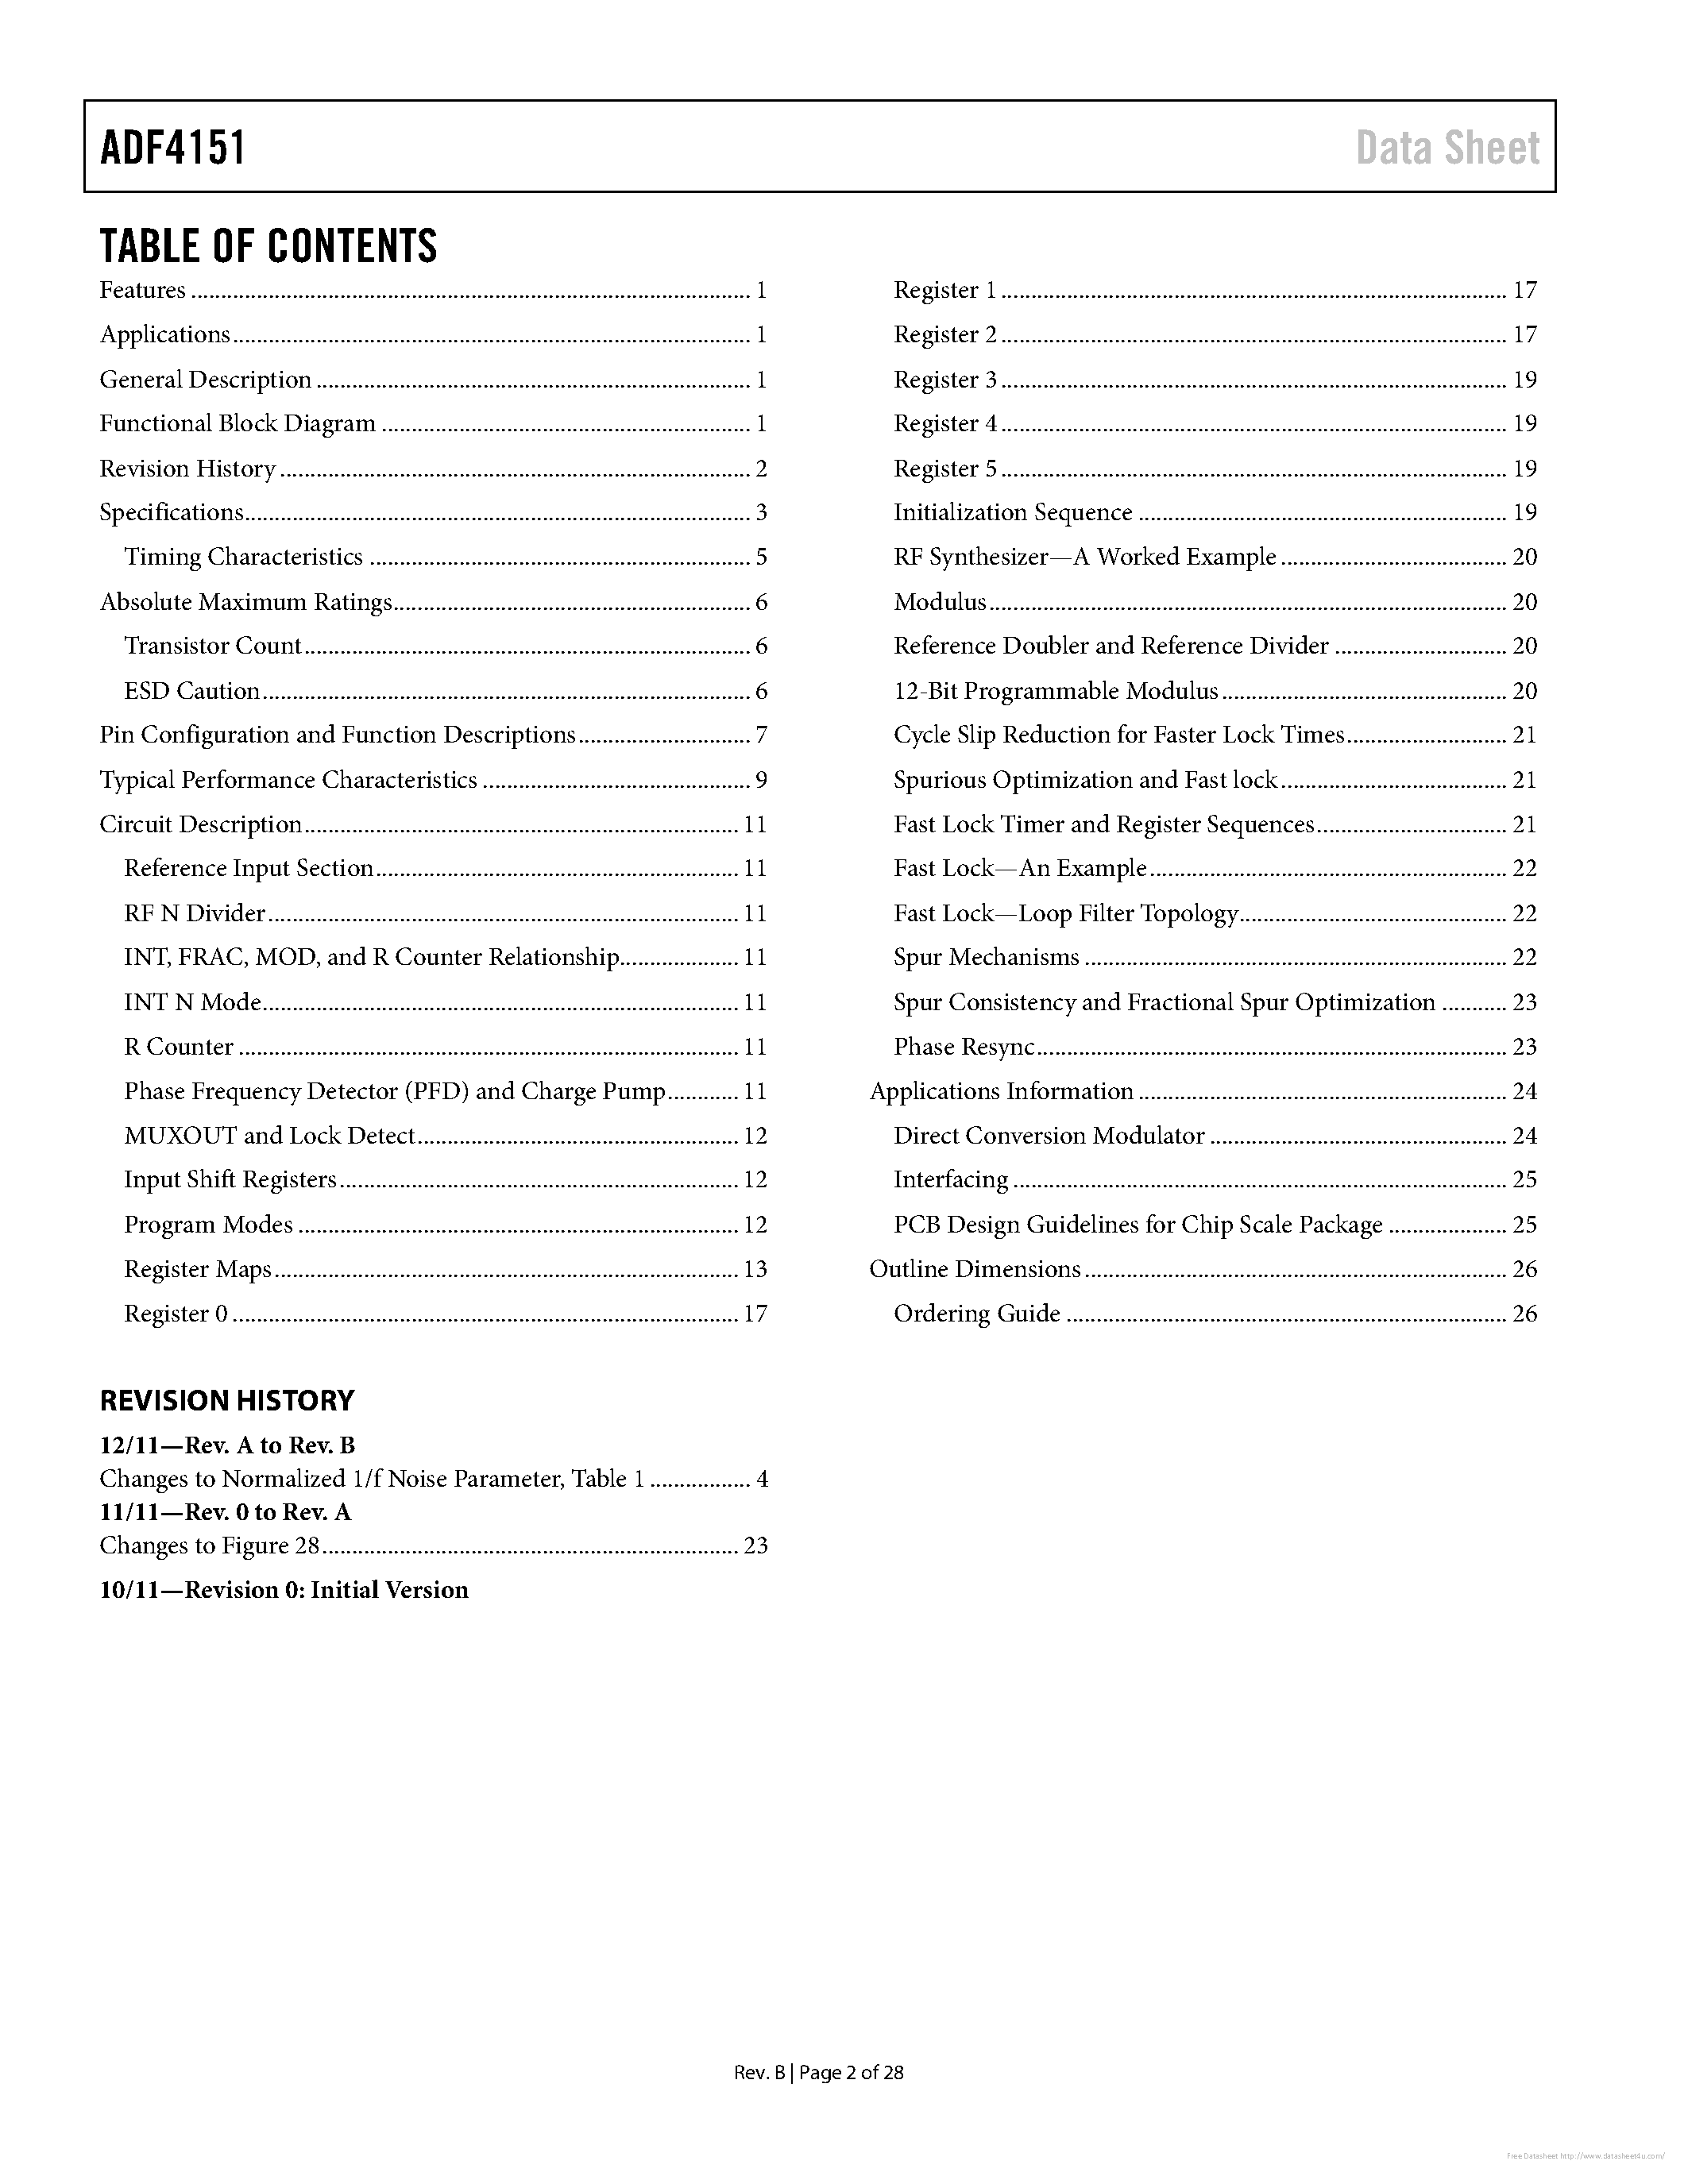 Datasheet ADF4151 - page 2